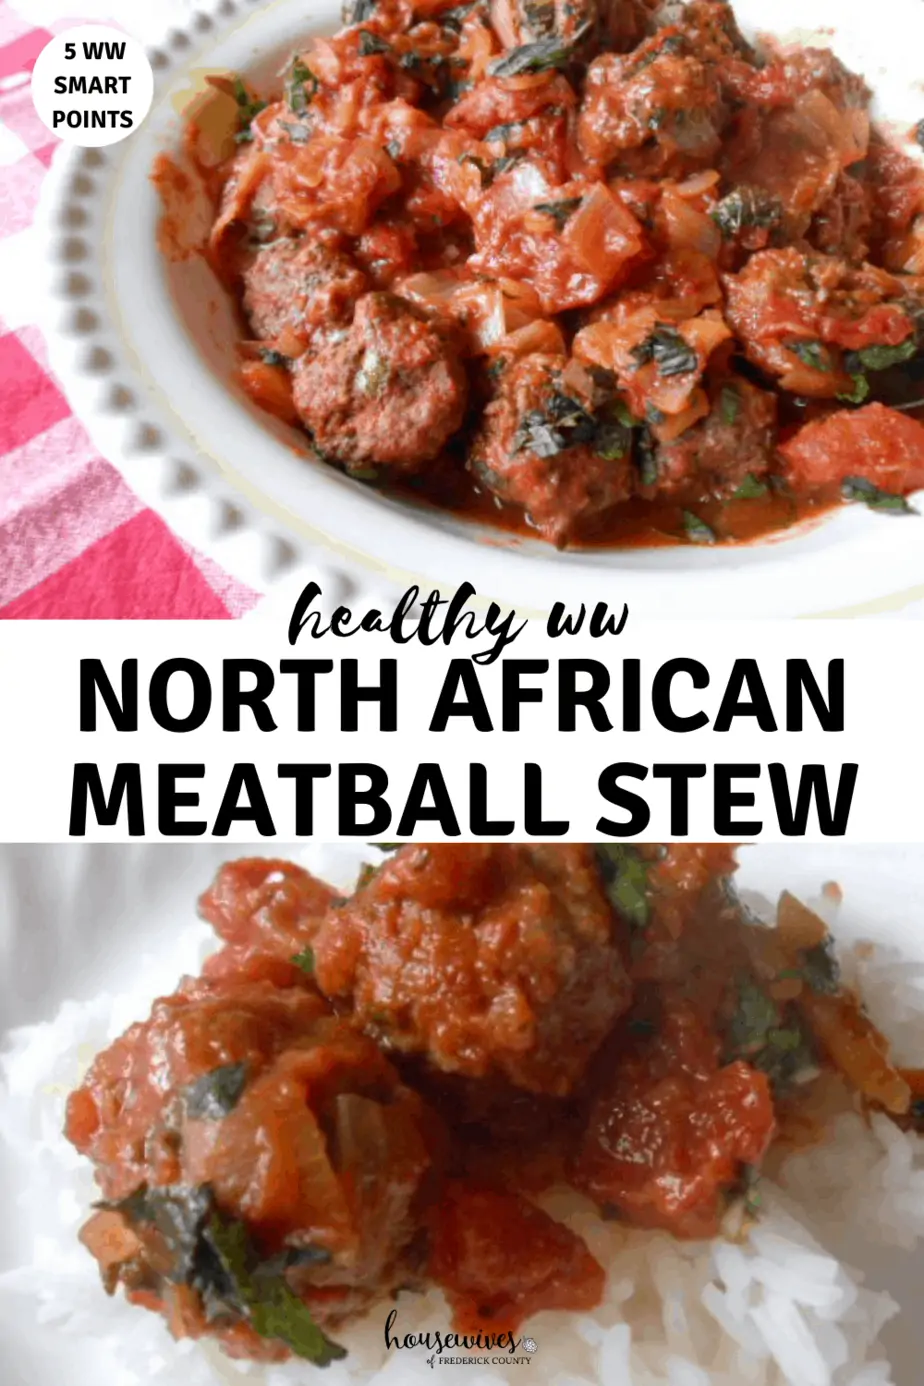 Meatball Stew Recipe